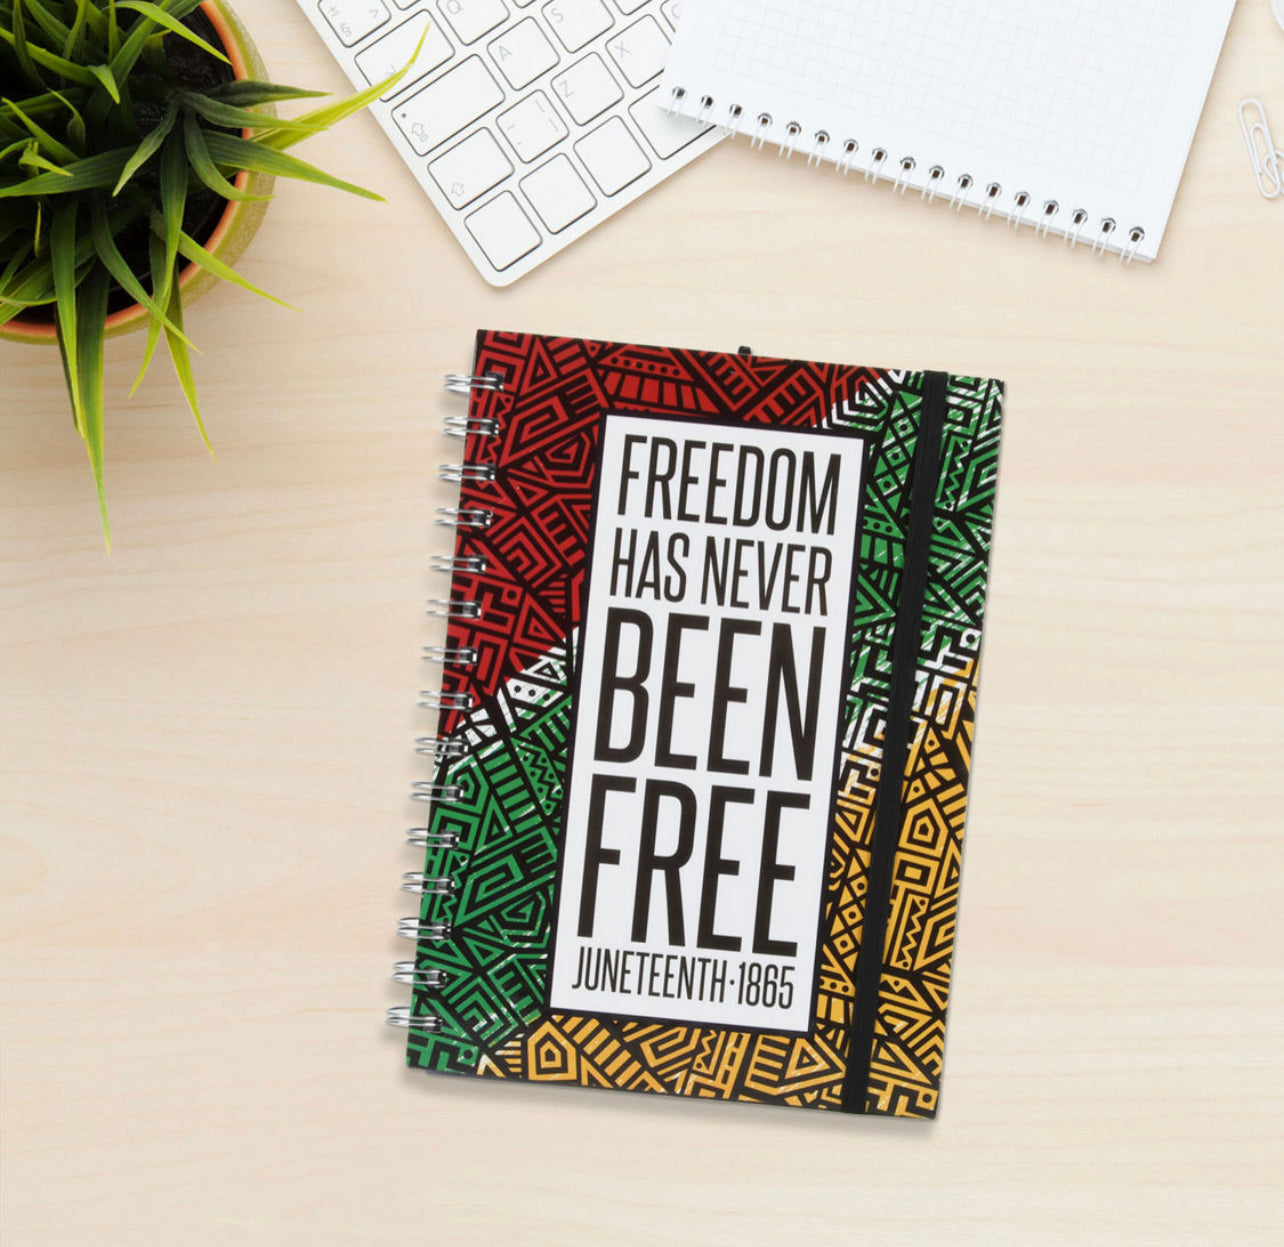 Freedom Notebook